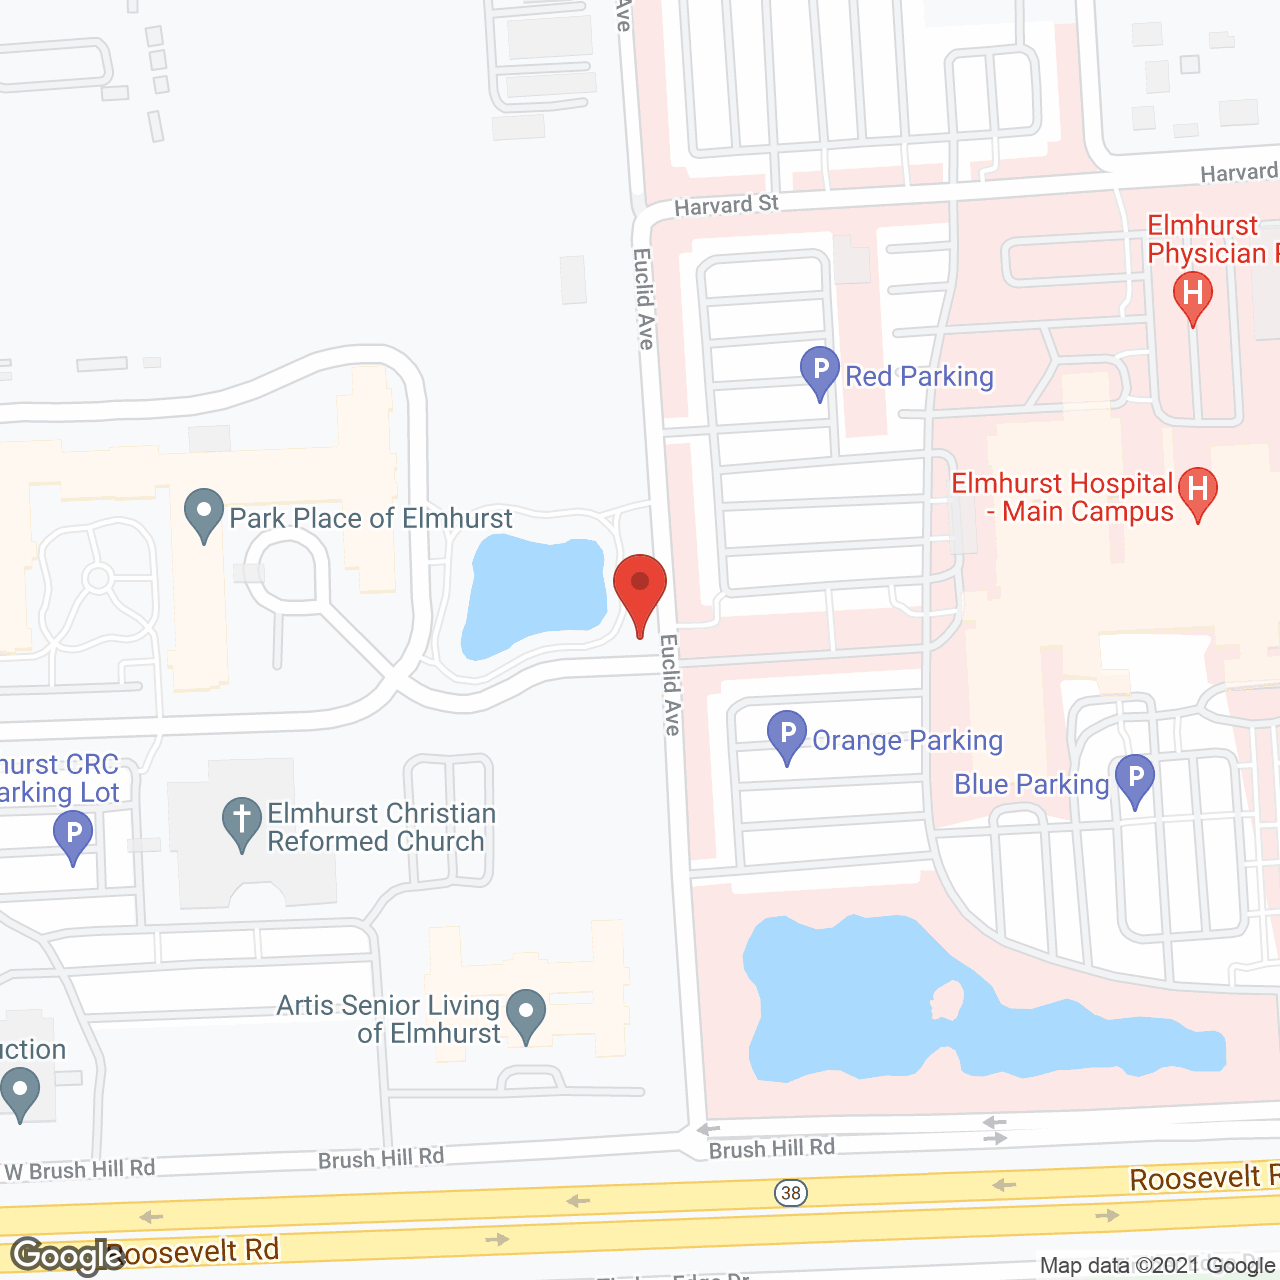 Park Place of Elmhurst in google map